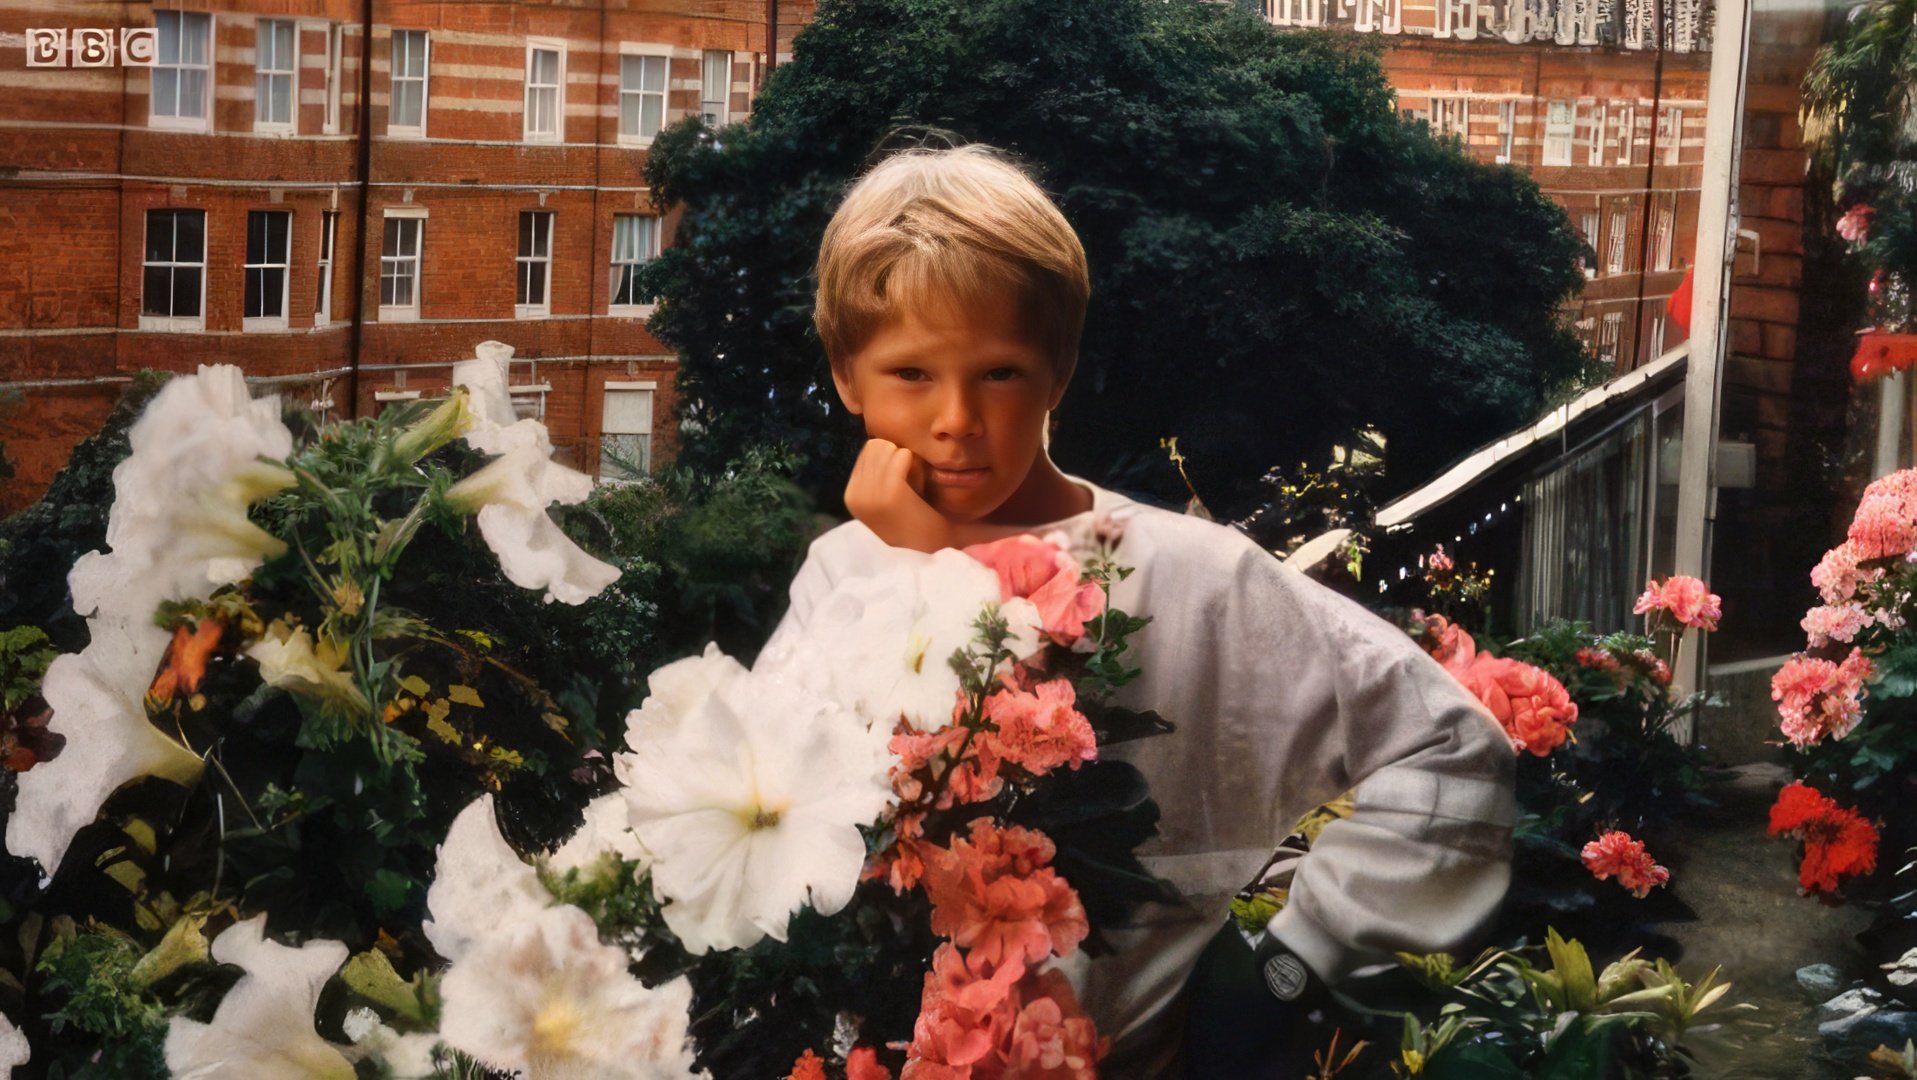 Benedict Cumberbatch's childhood photo